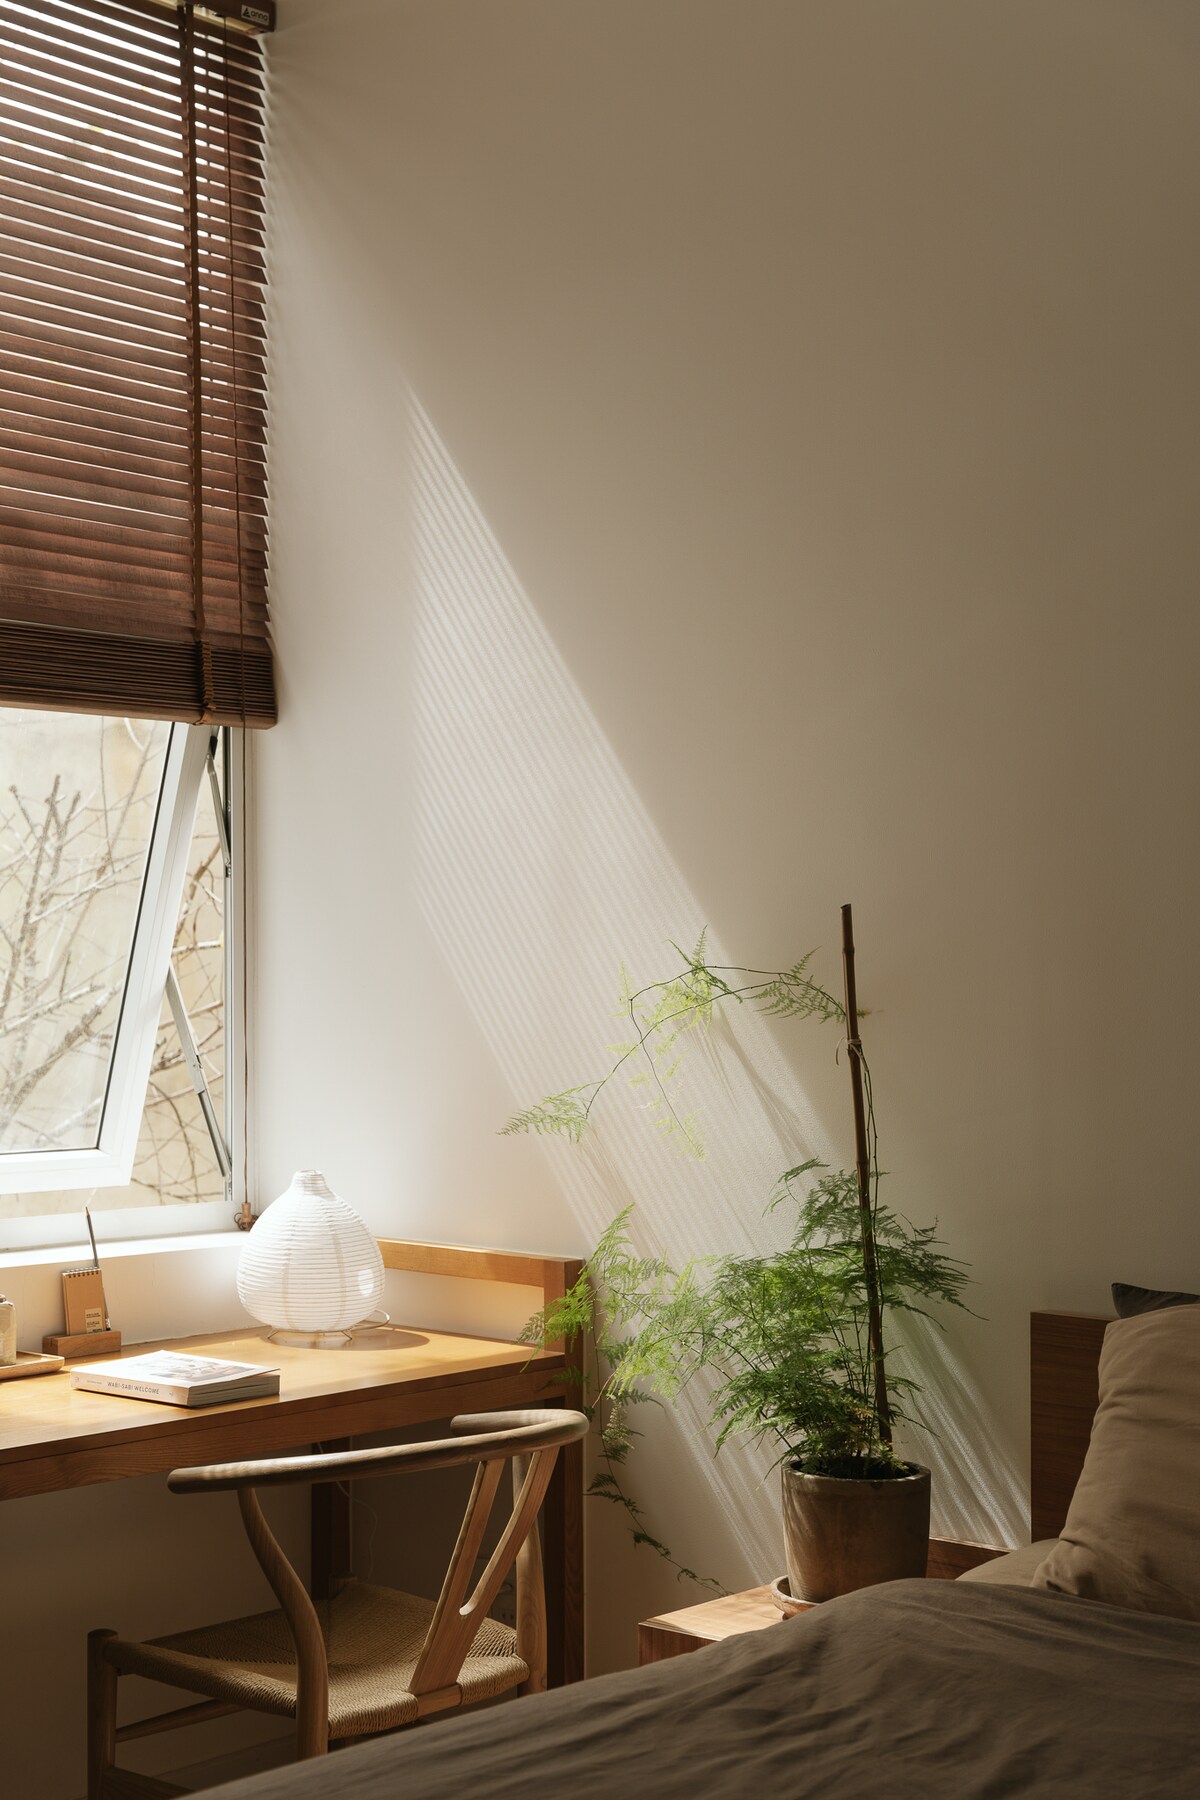 YOKO/CHAM -舒适的房间，配有热水浴缸和花园景观